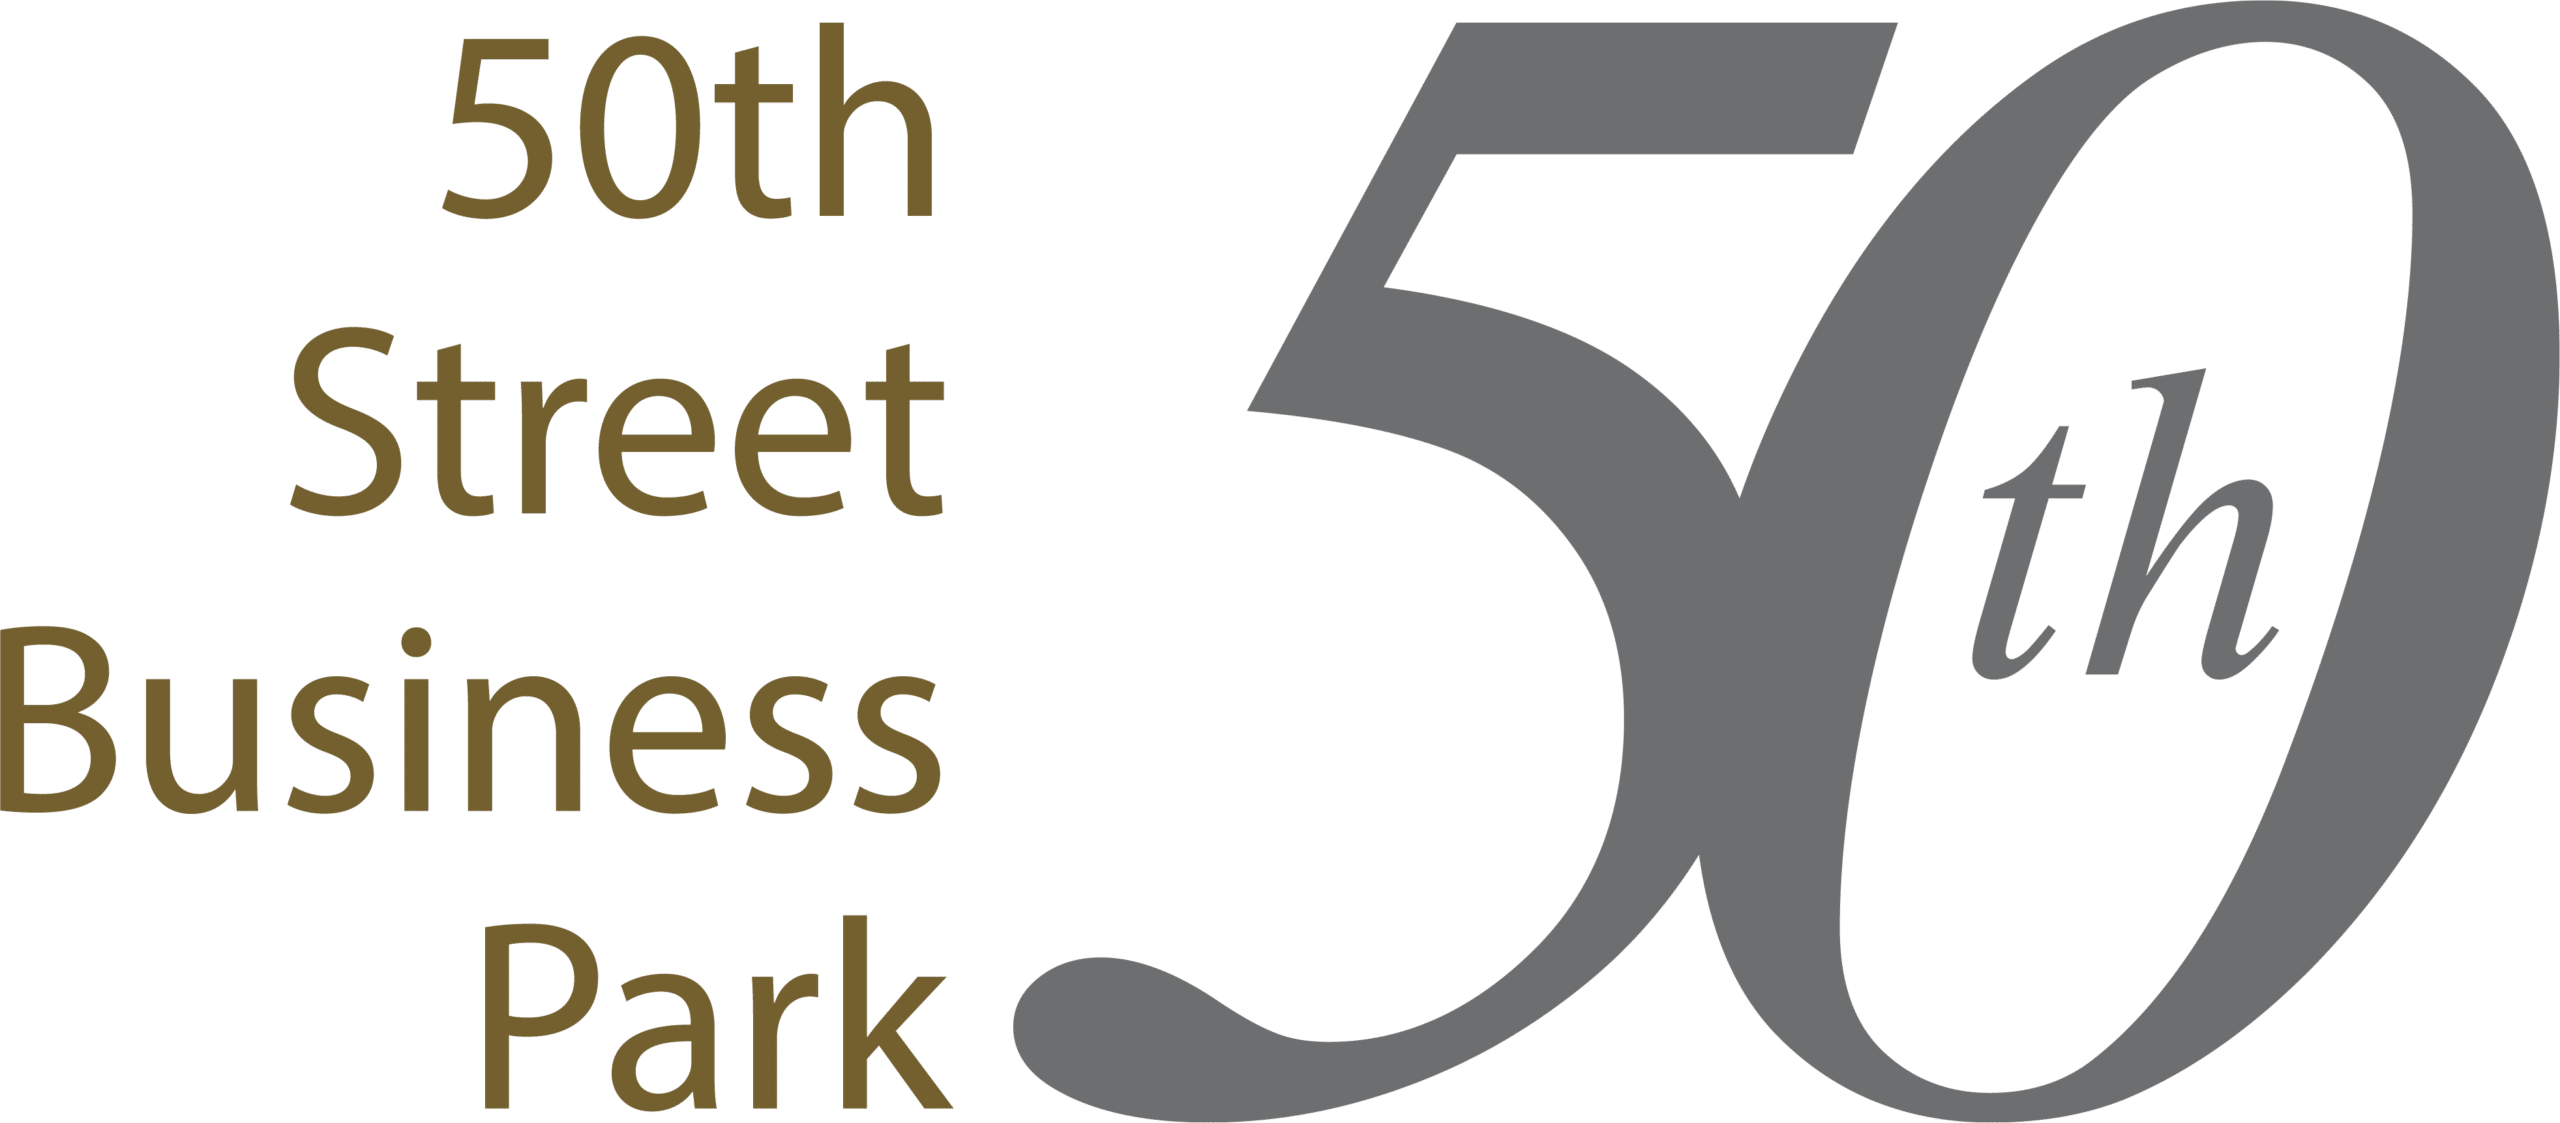 50th Street Business Park Logo 2